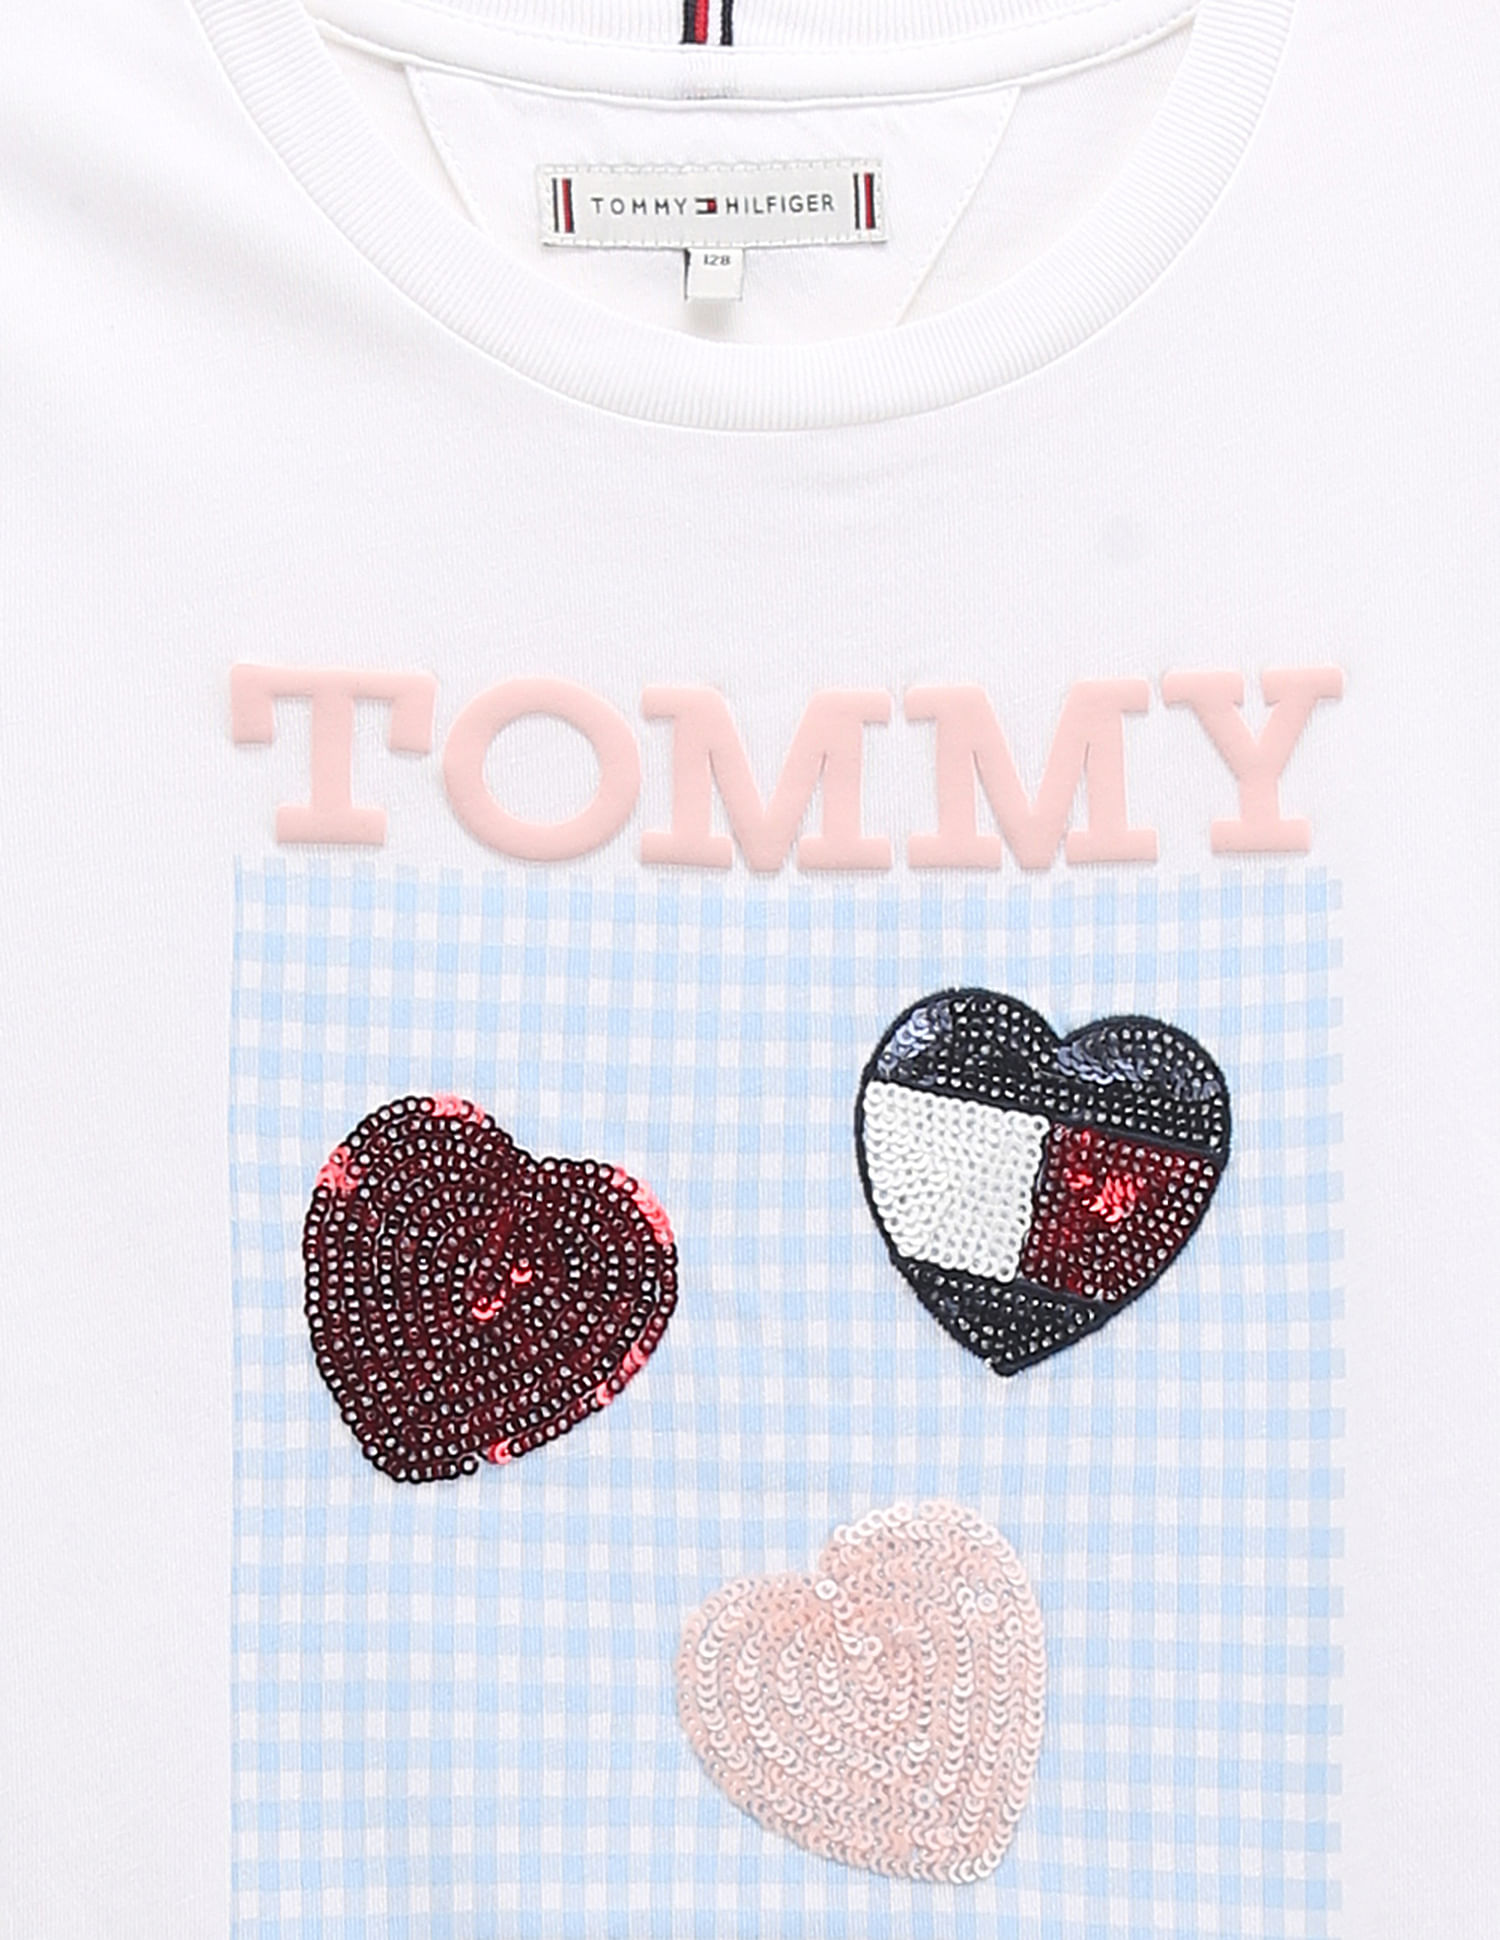 Tommy Hilfiger Kids All Over Heart Print Tee (Big Kids) (White